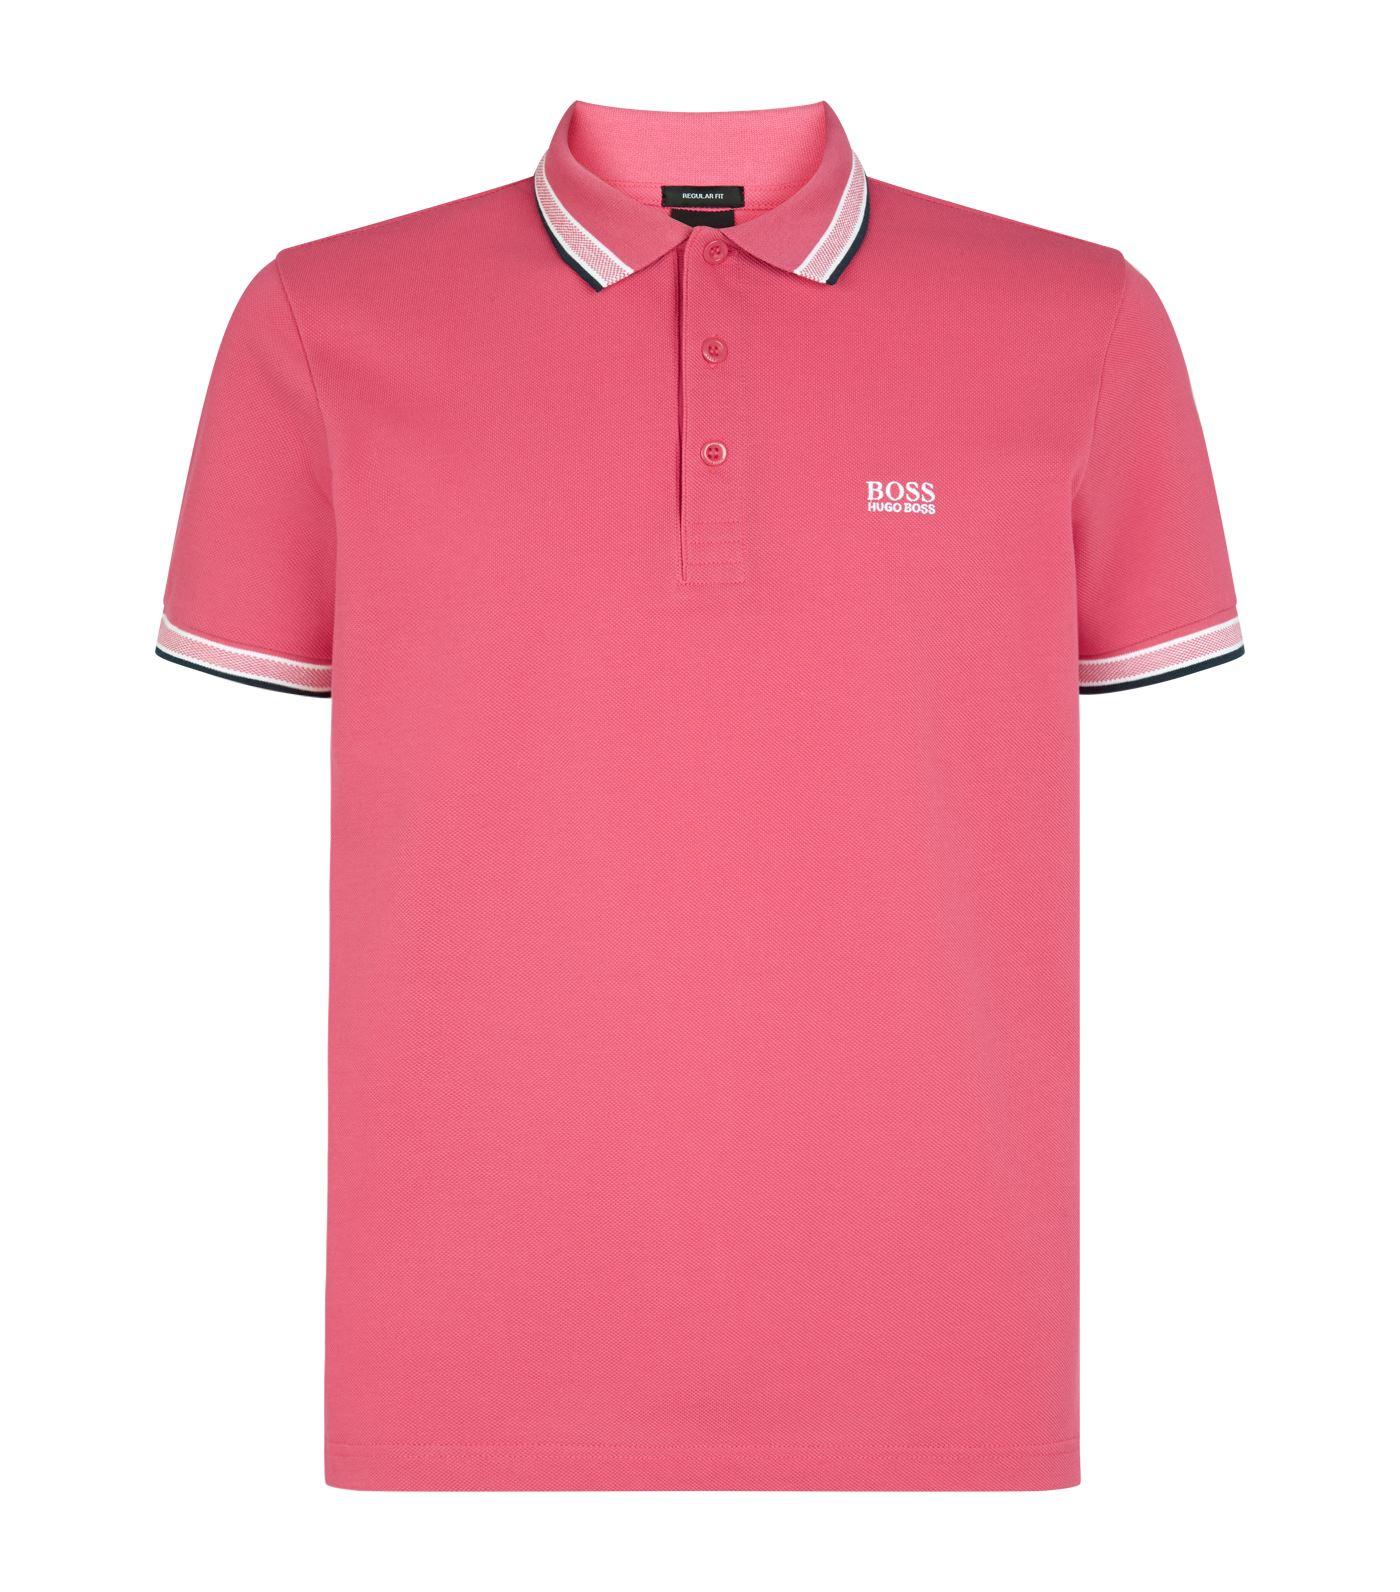 BOSS Piqu Cotton Polo Shirt in Pink for Men - Lyst